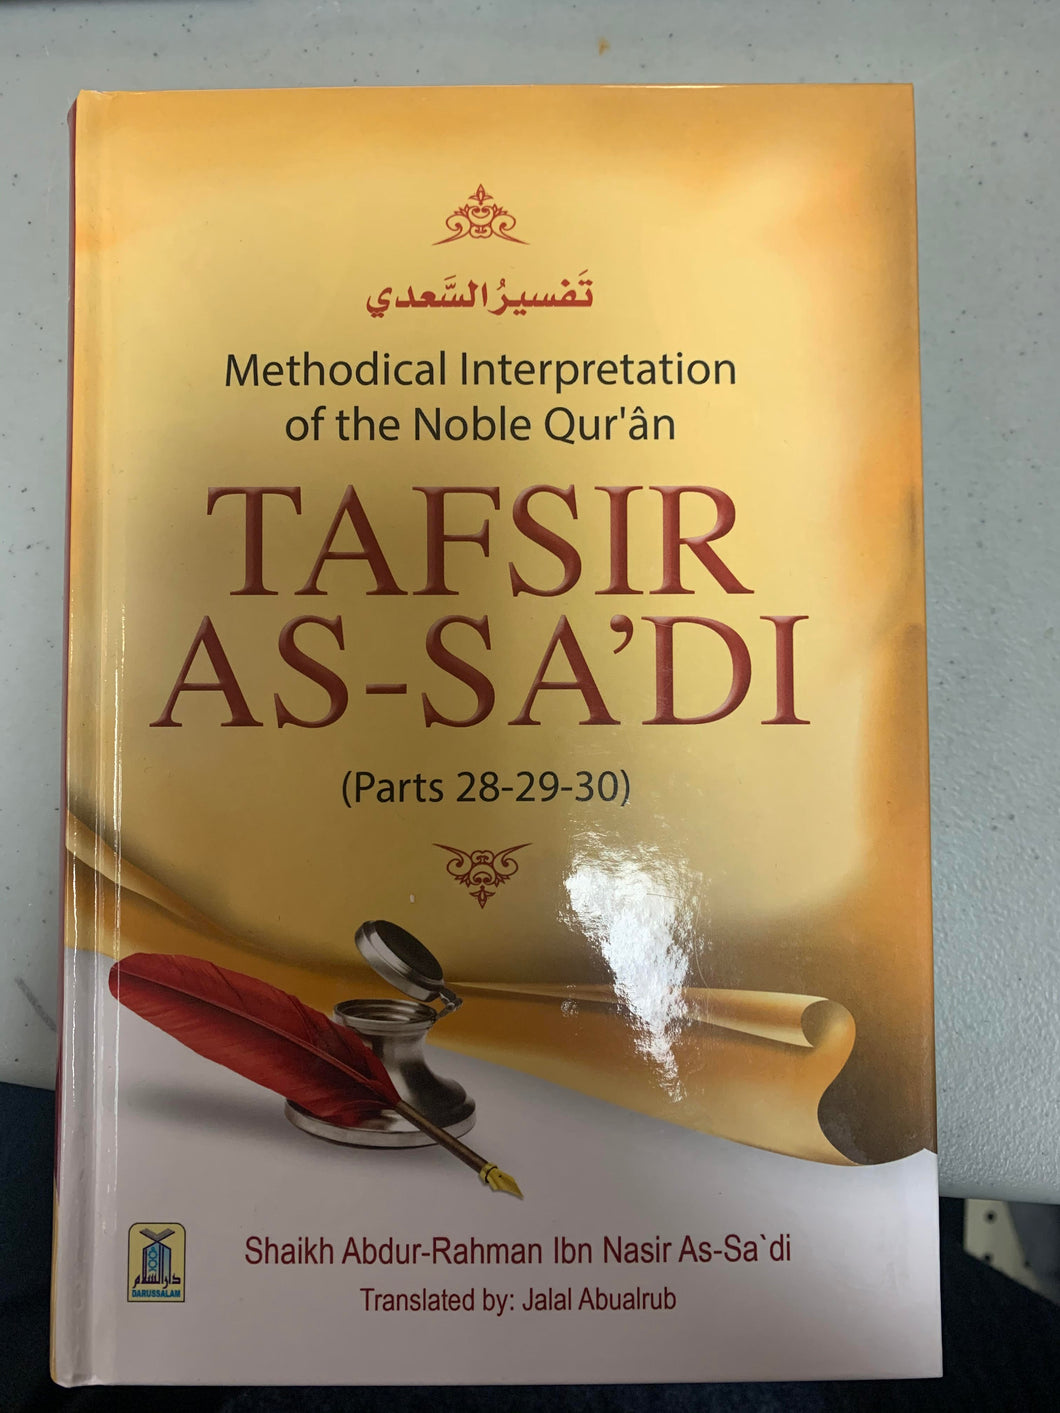 The Methodical Interpretation of the Noble Quran Tafsir As-Sadi